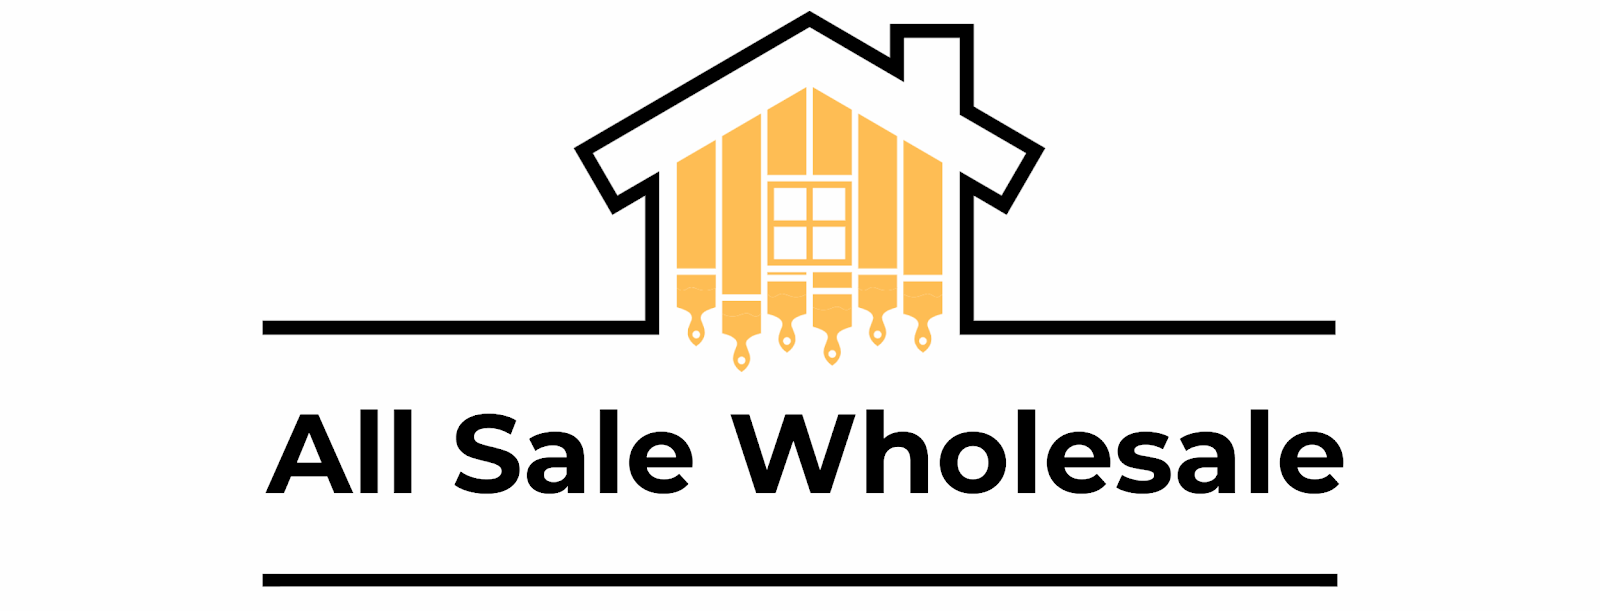 All Sale Wholesale 